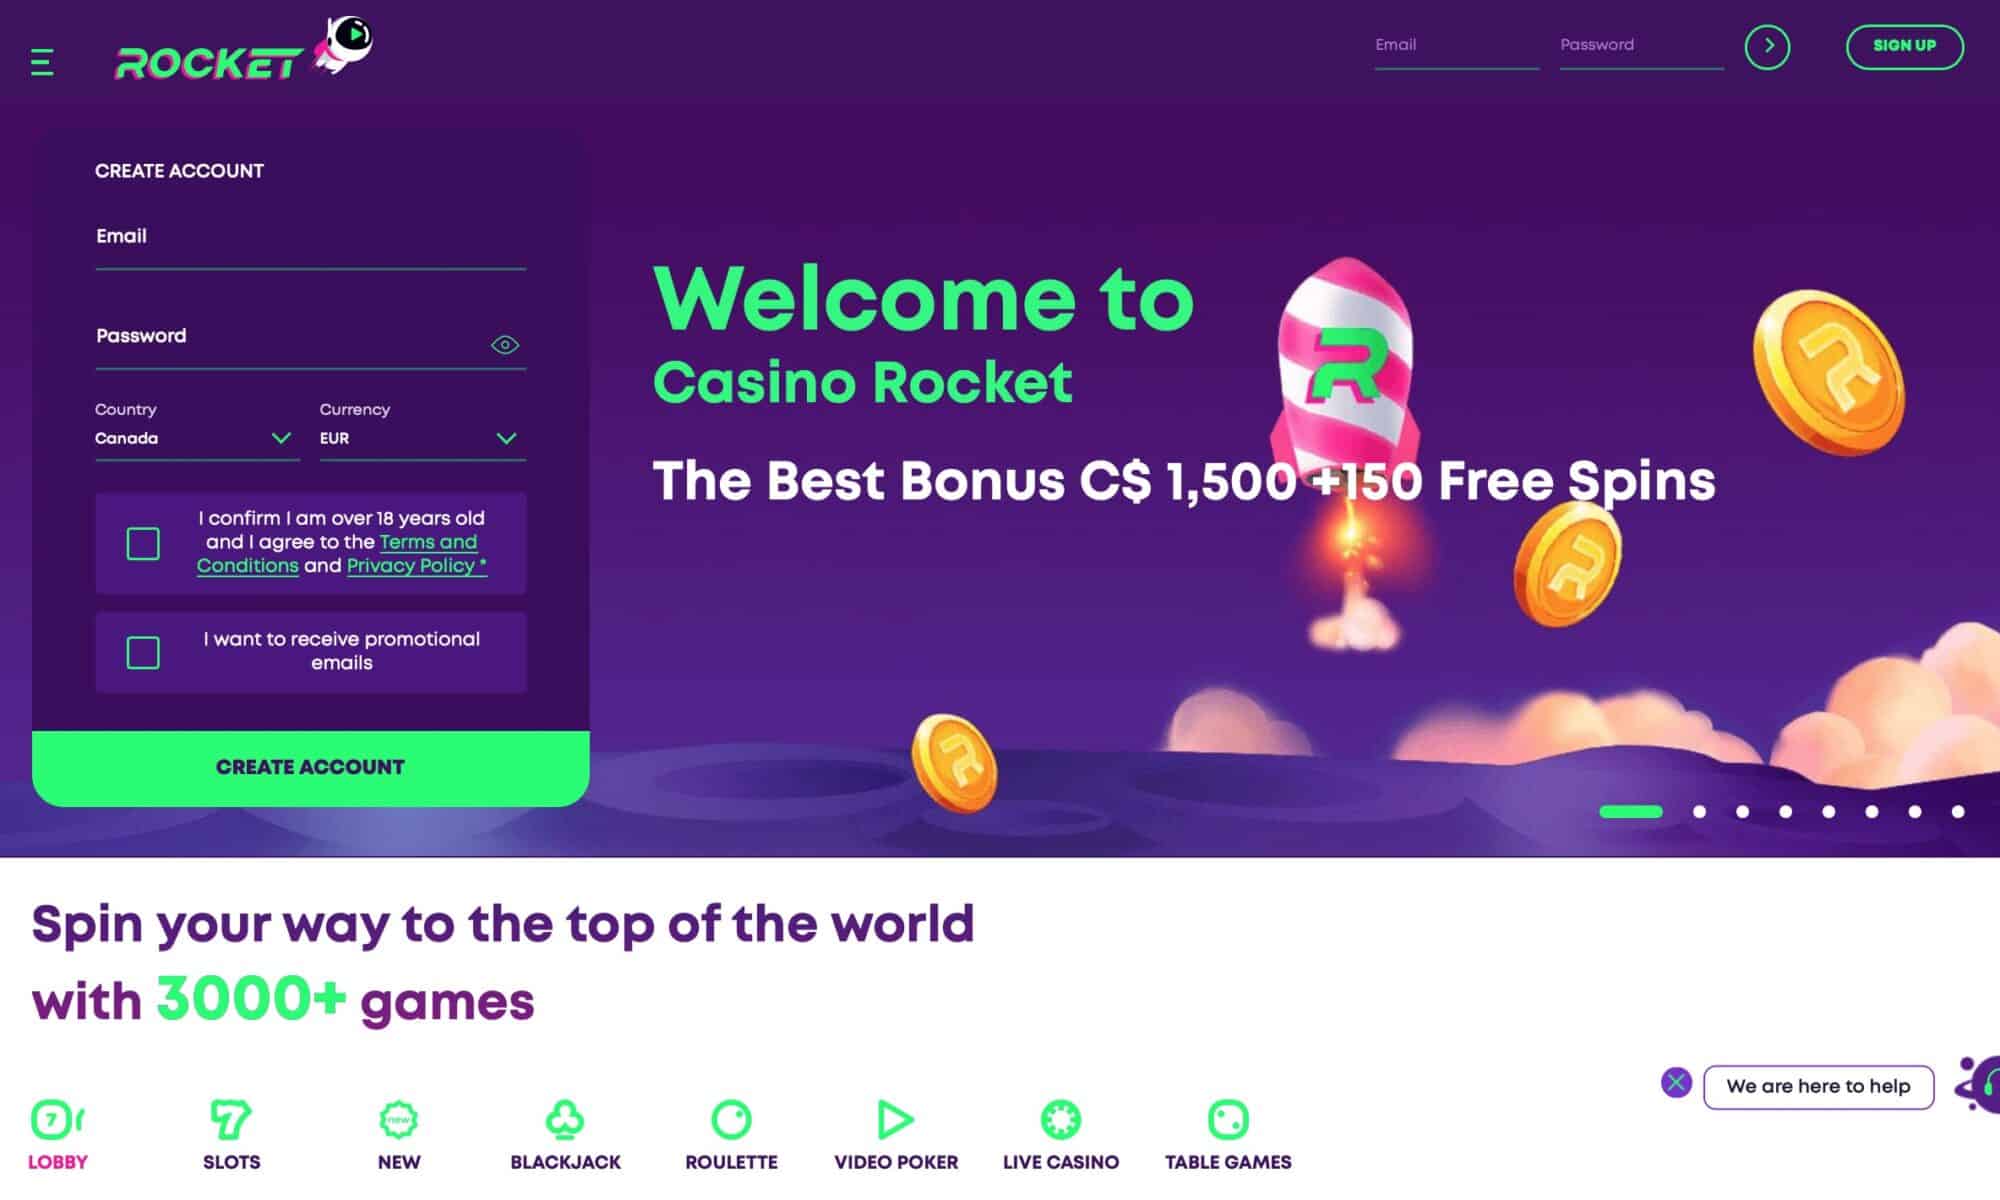 Casino Rocket - get $1500 deposit bonus + 150 free spins